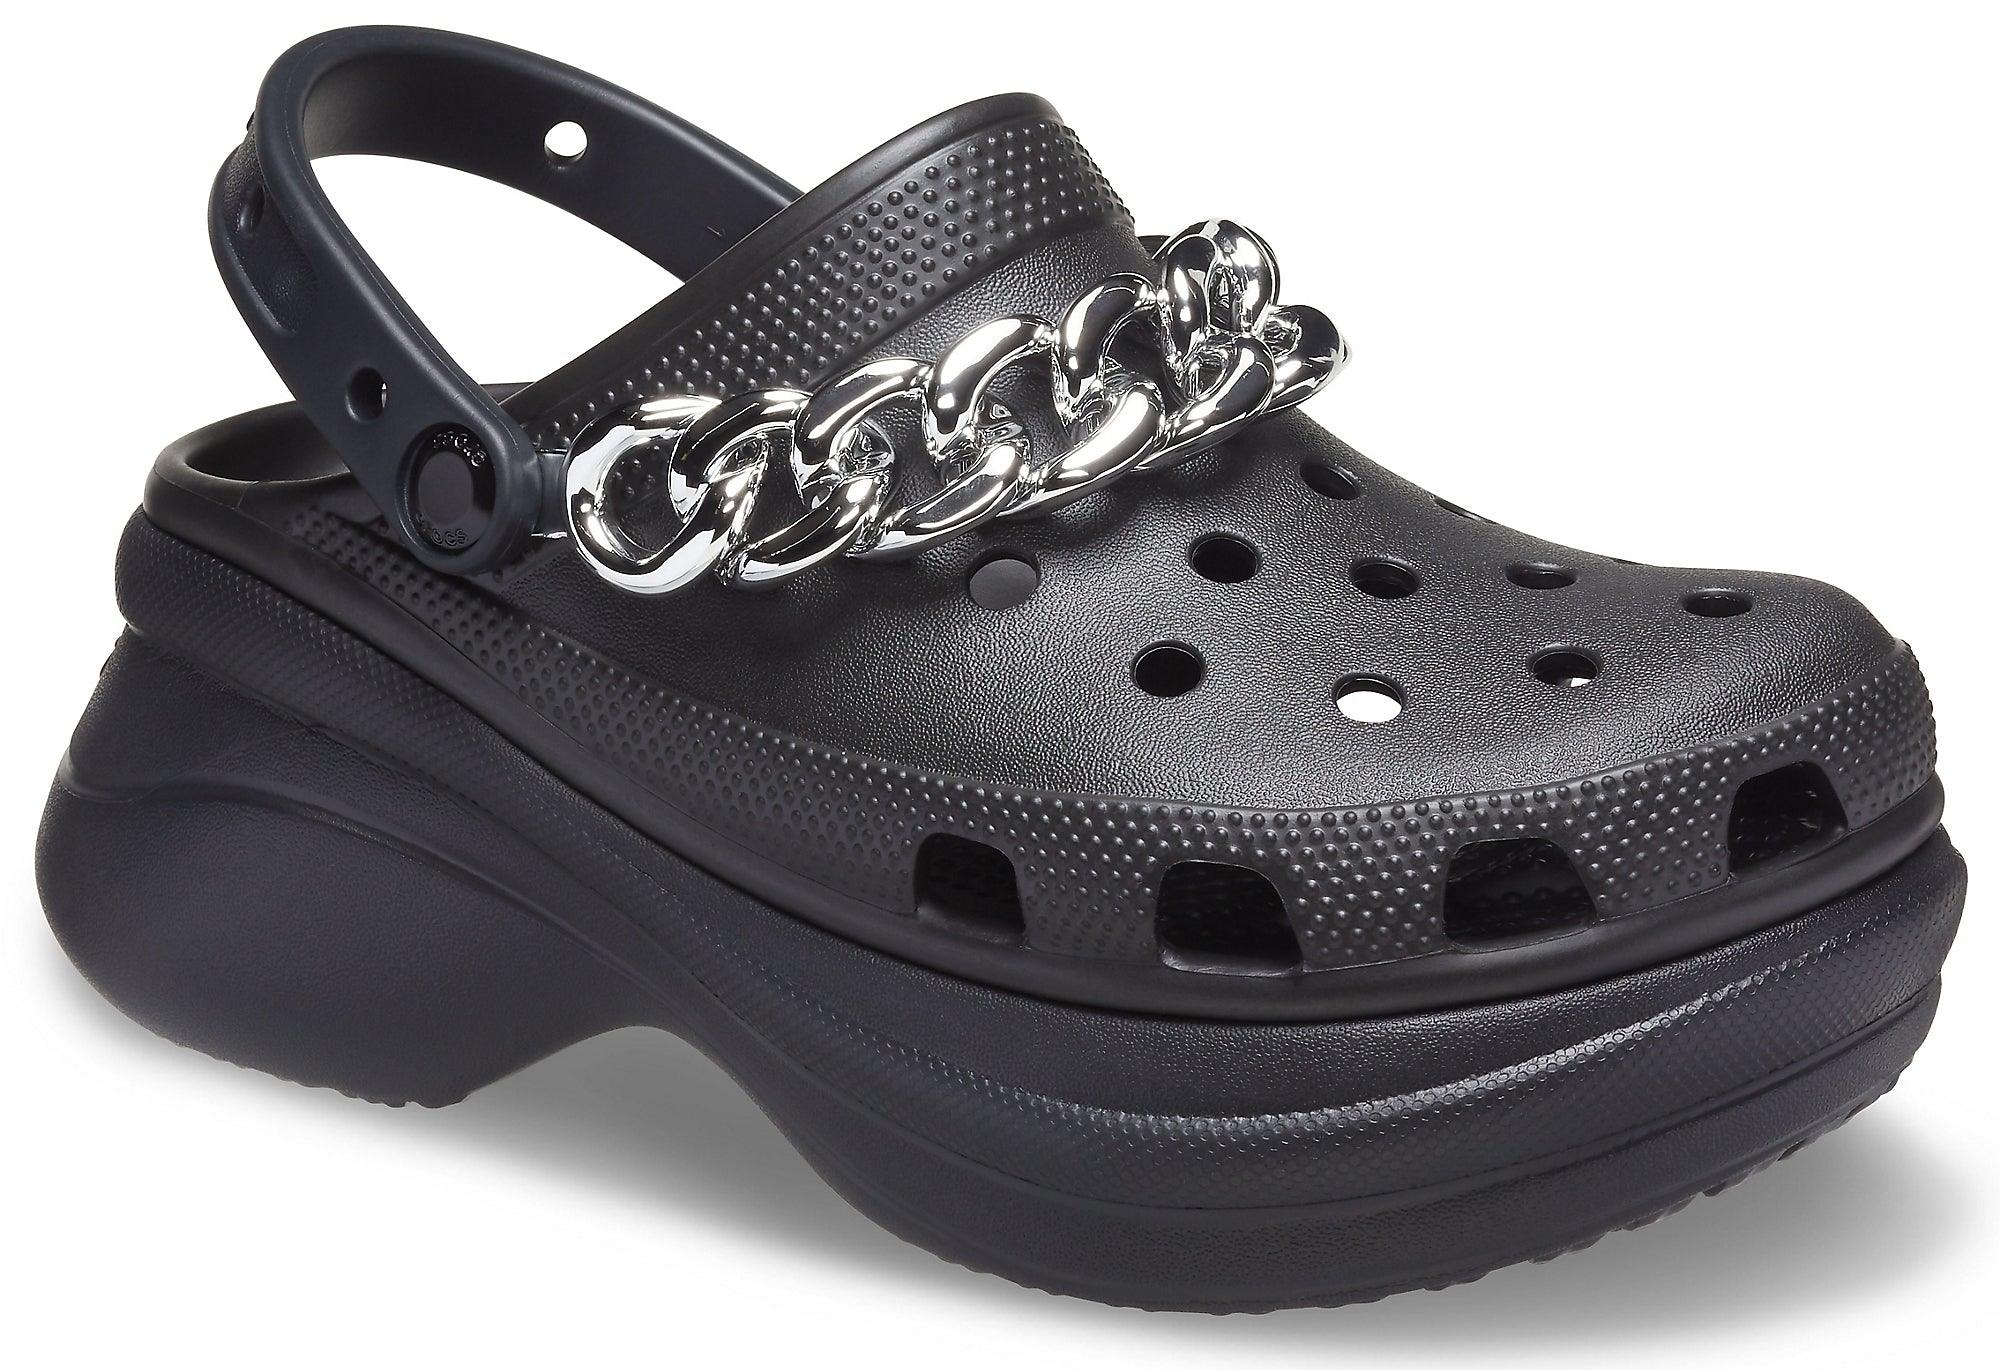 Authentic Crocs Classic Bae Clog for Women, mStore.Kh